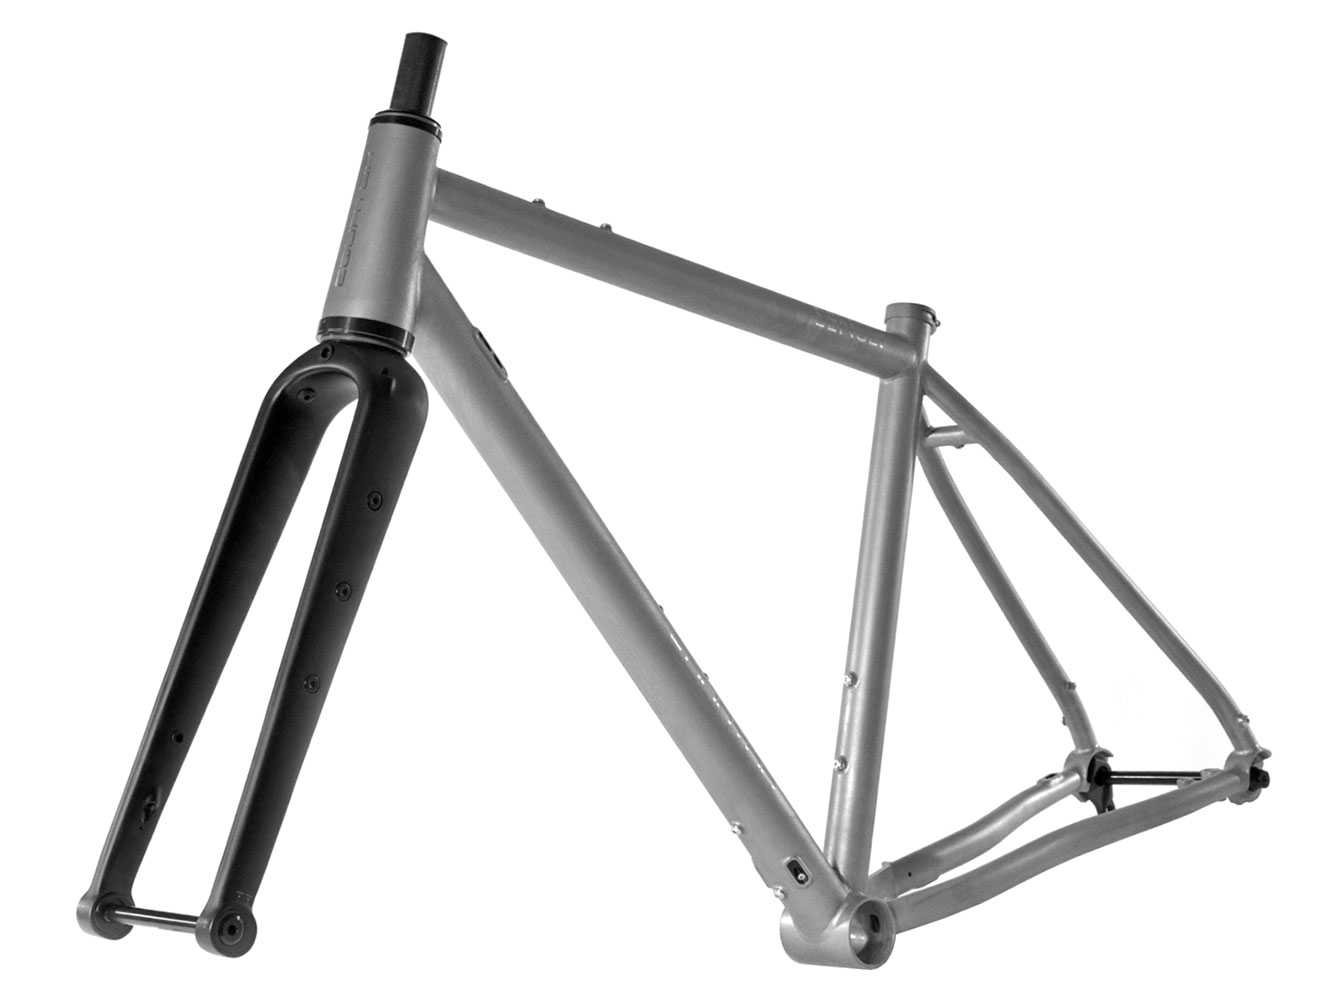 Equator's new affordable consumer-direct titanium gravel bikes, Sensei frameset